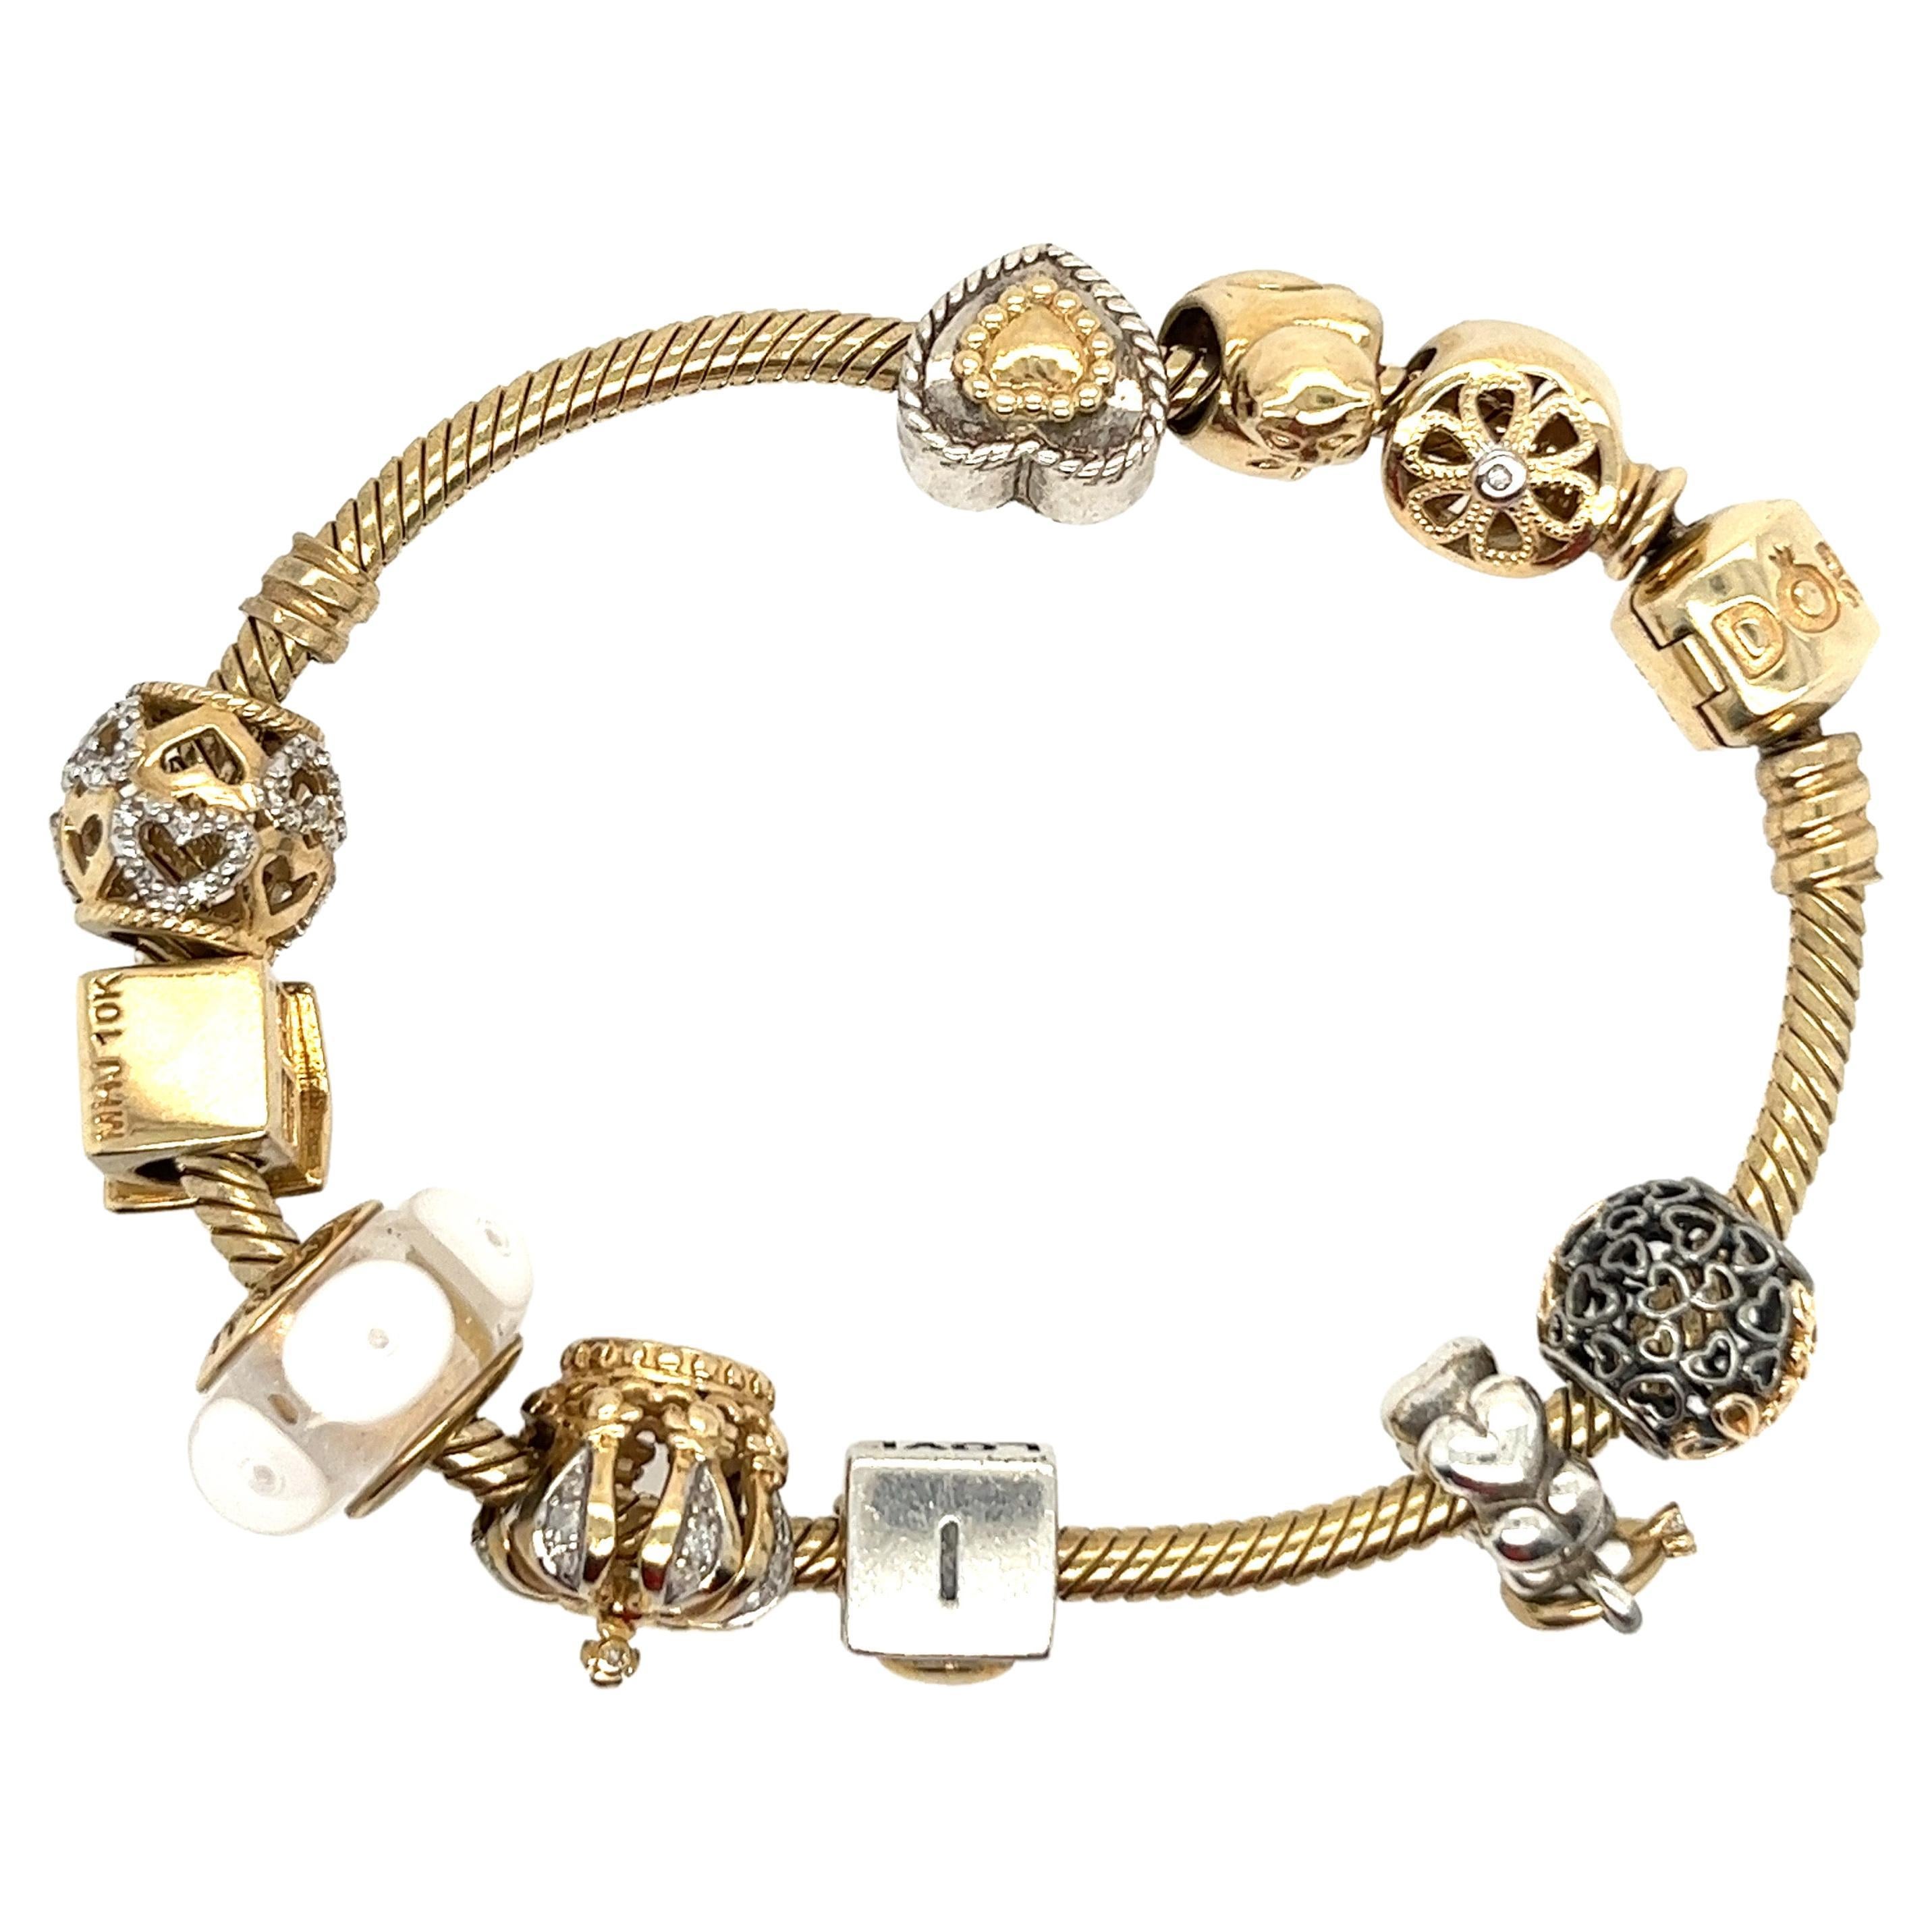 Pandora 14k Gold Charm Bracelet with 10 Charms